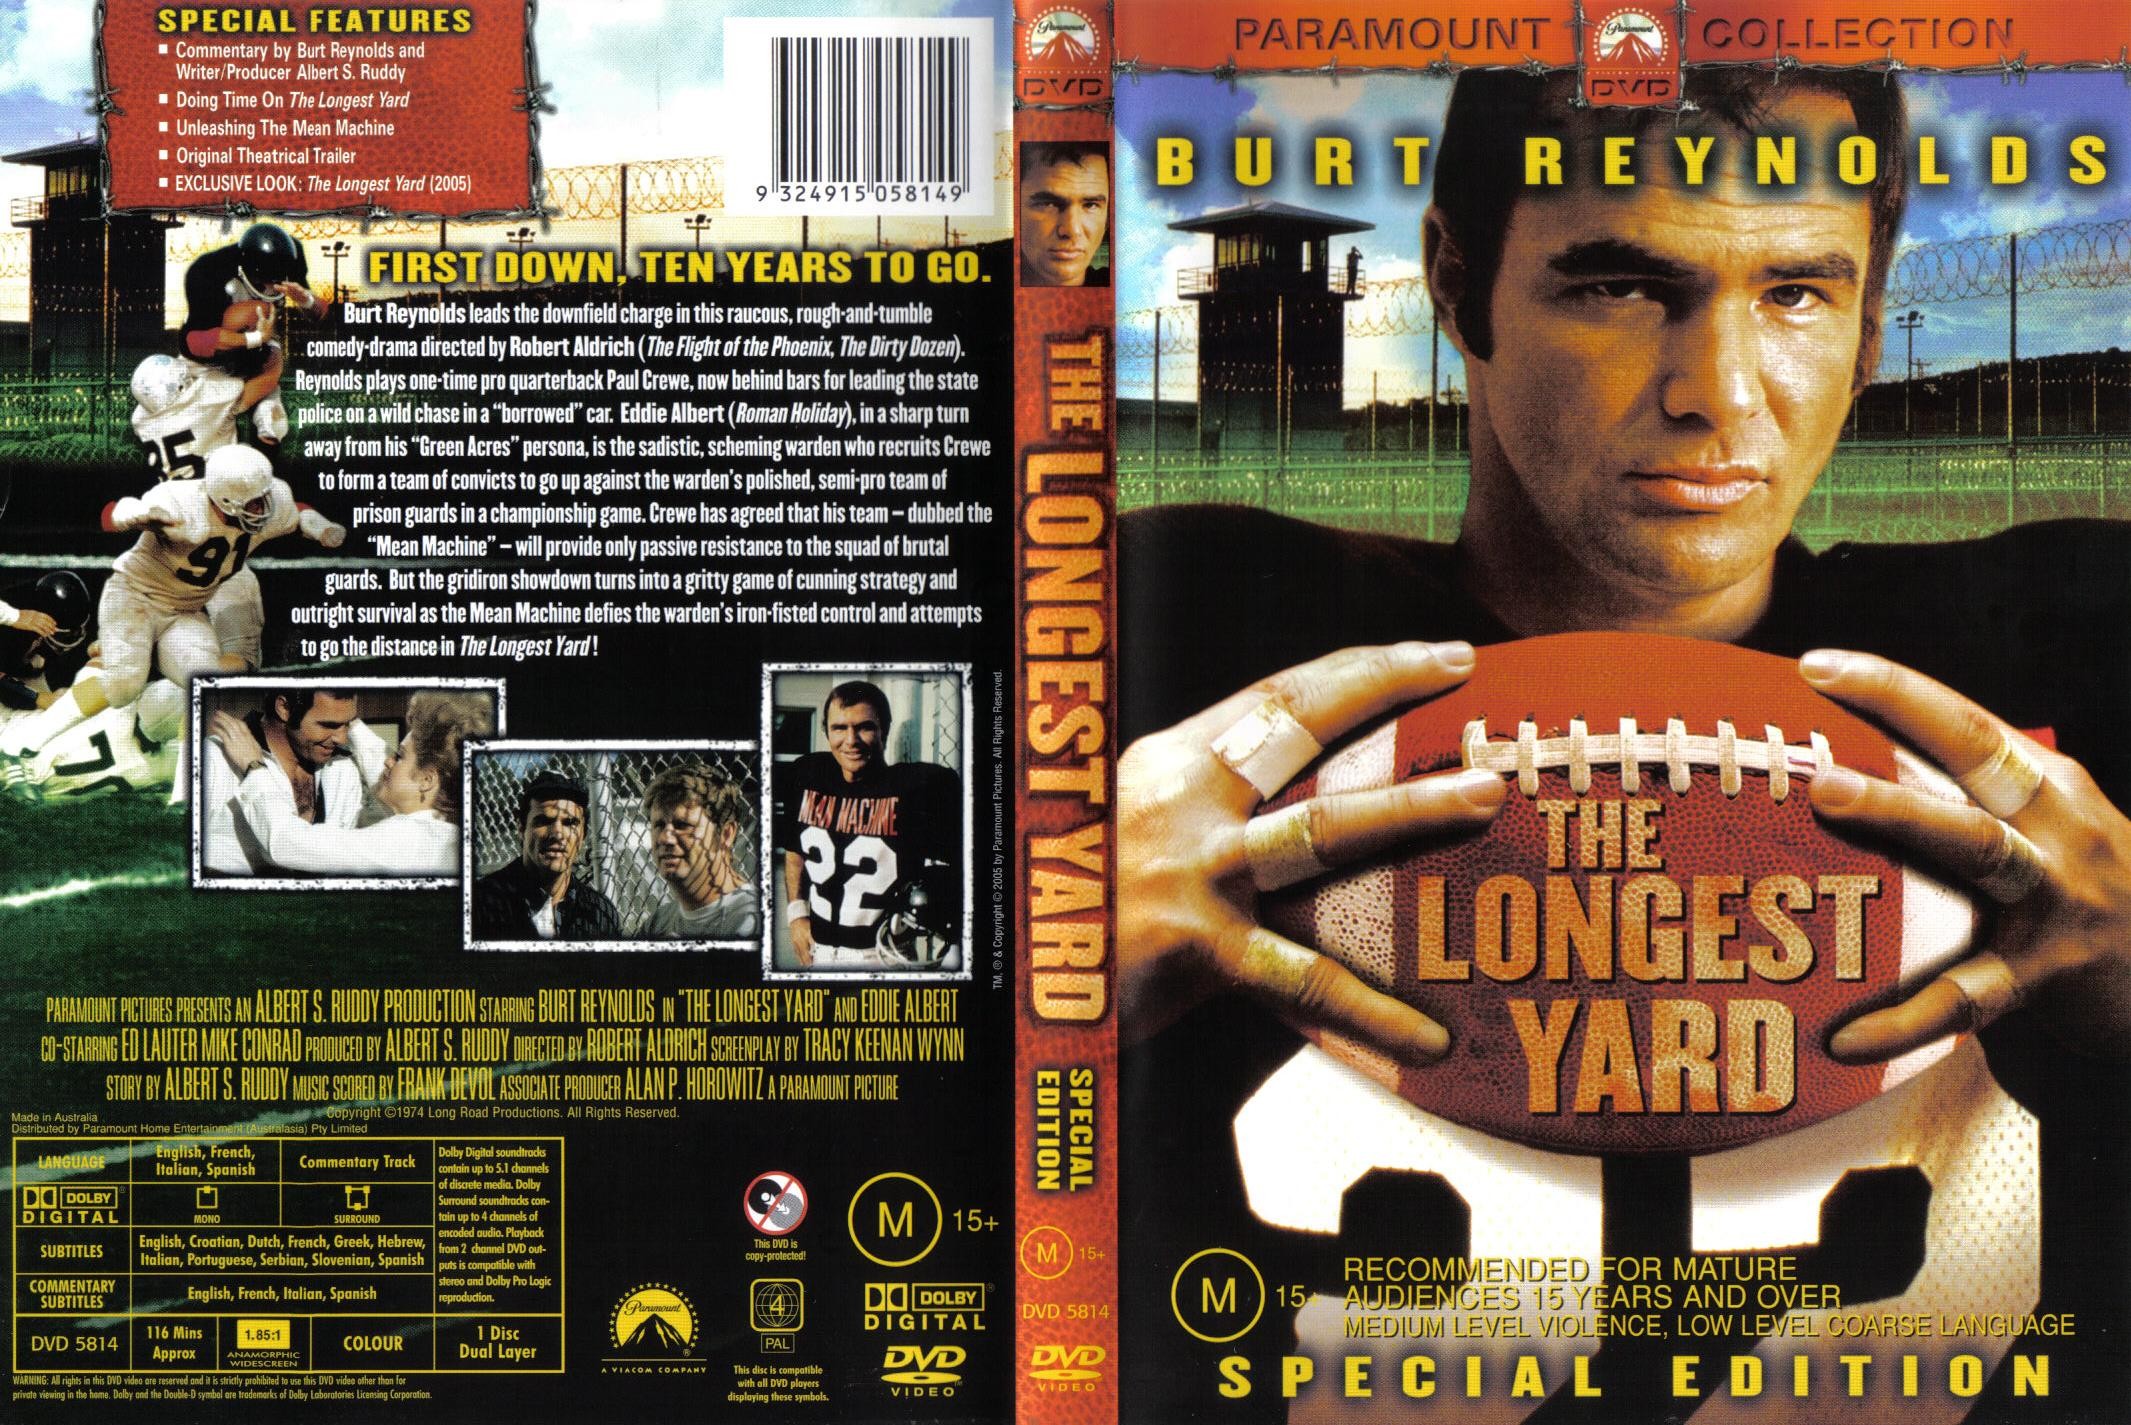 Jaquette DVD The Longest yard (1974) Zone 1